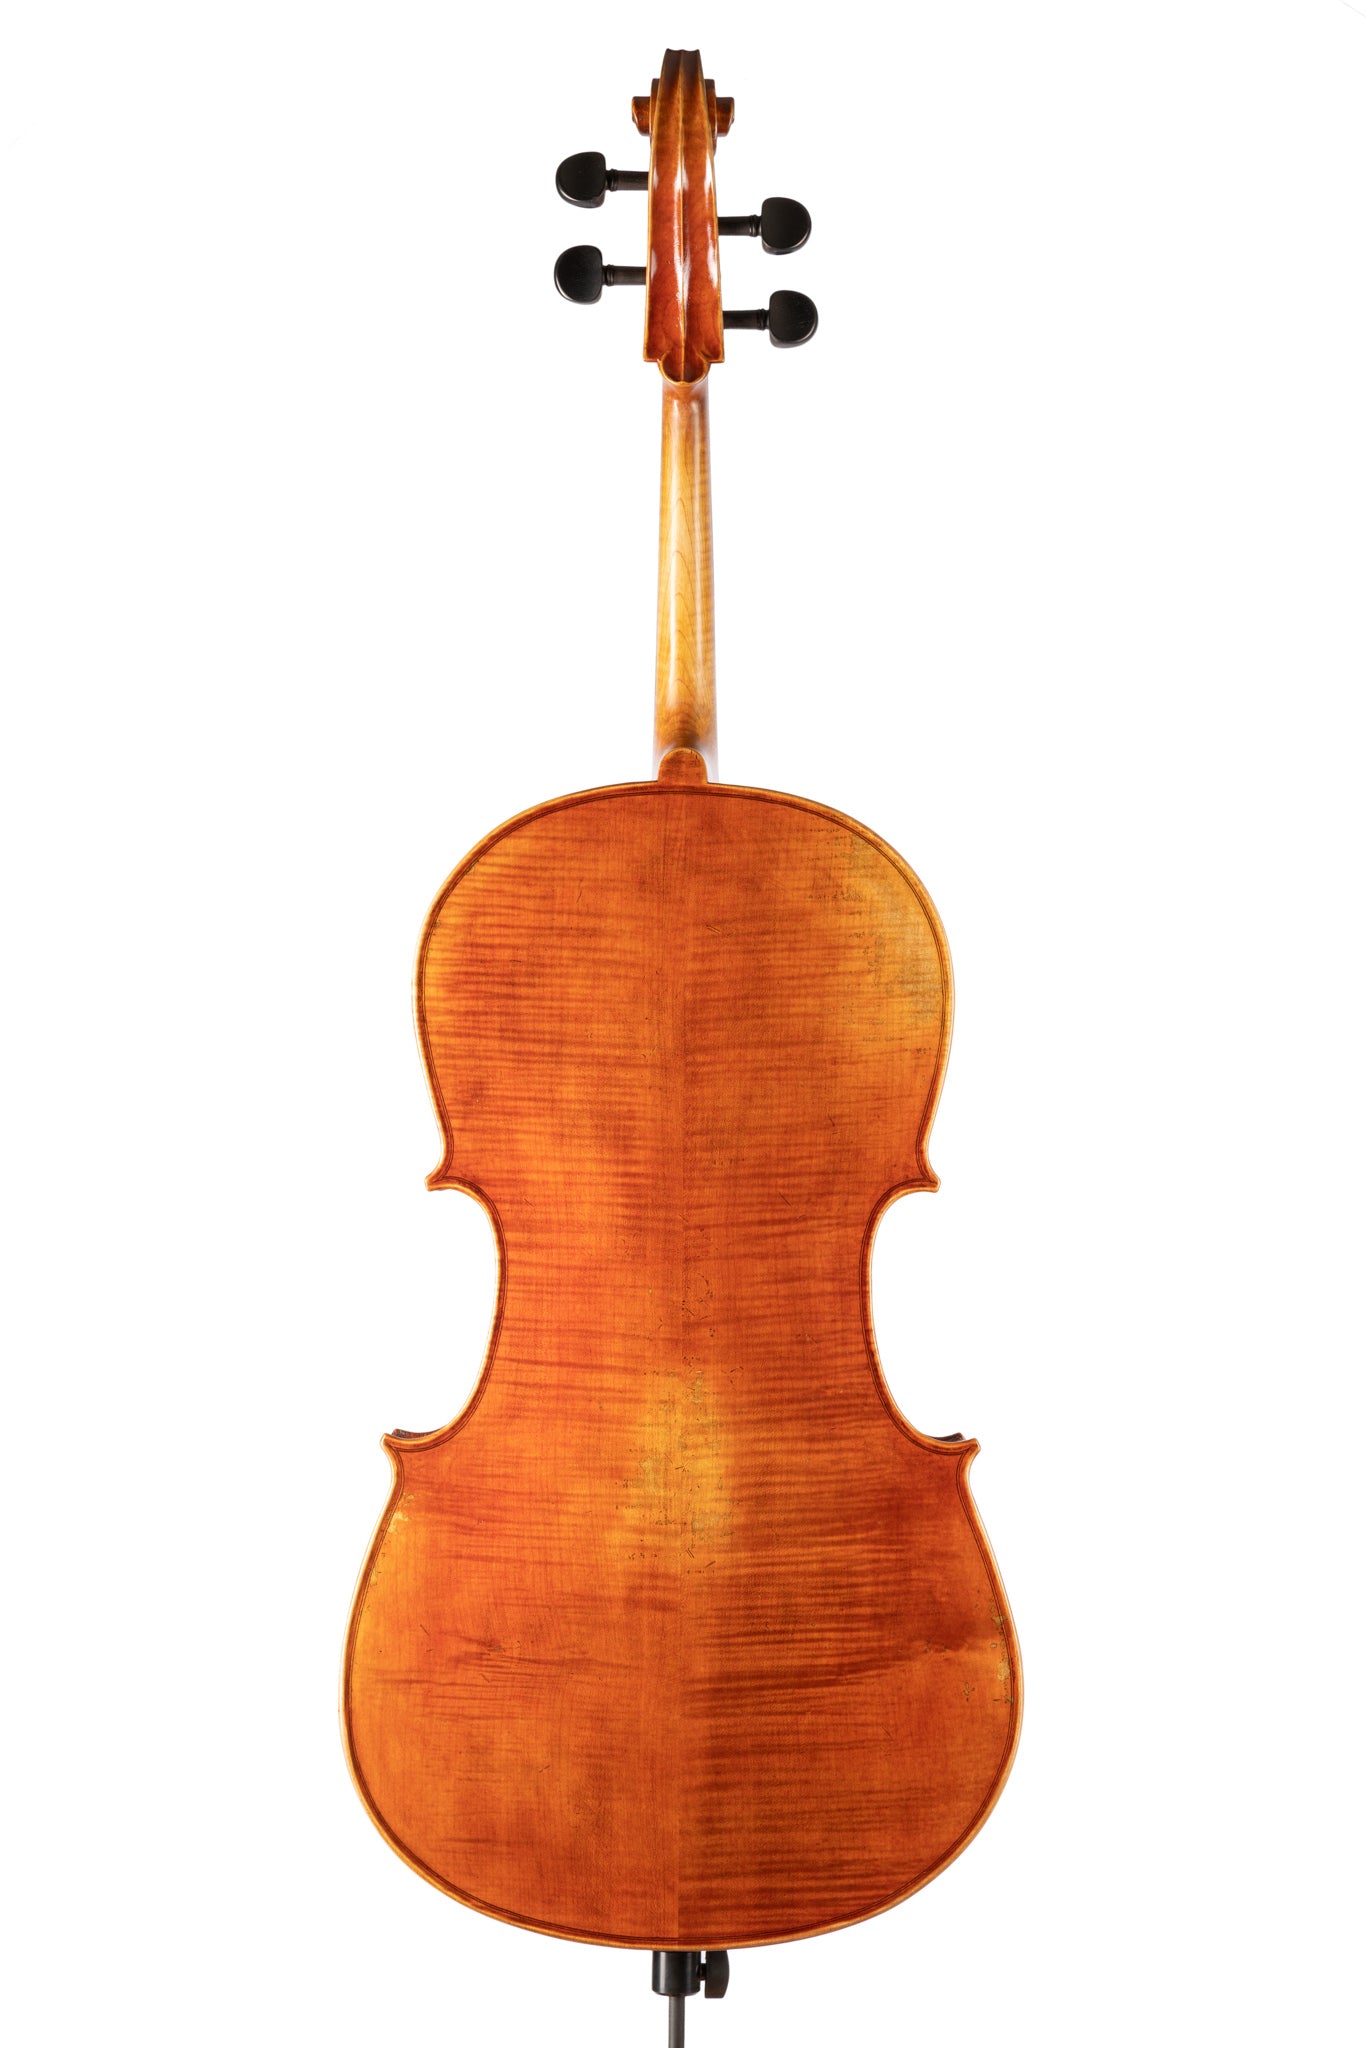 WY-400 Cello